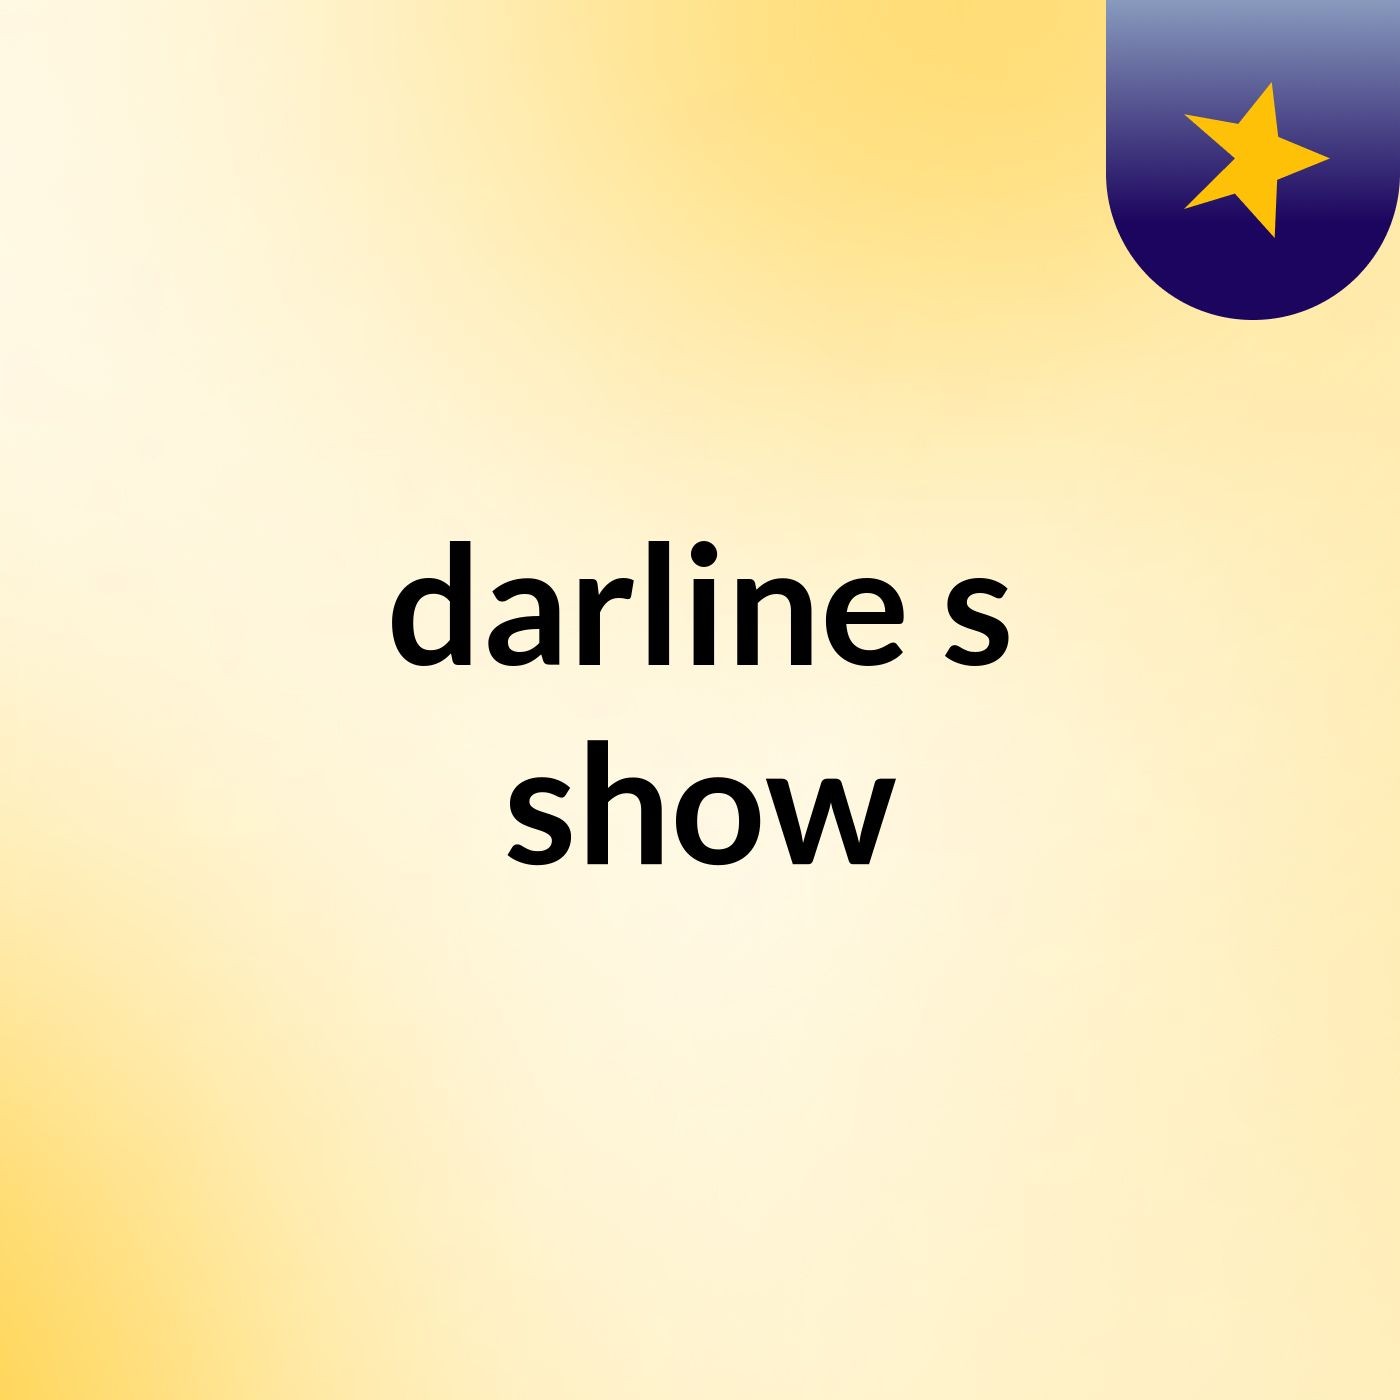 darline's show